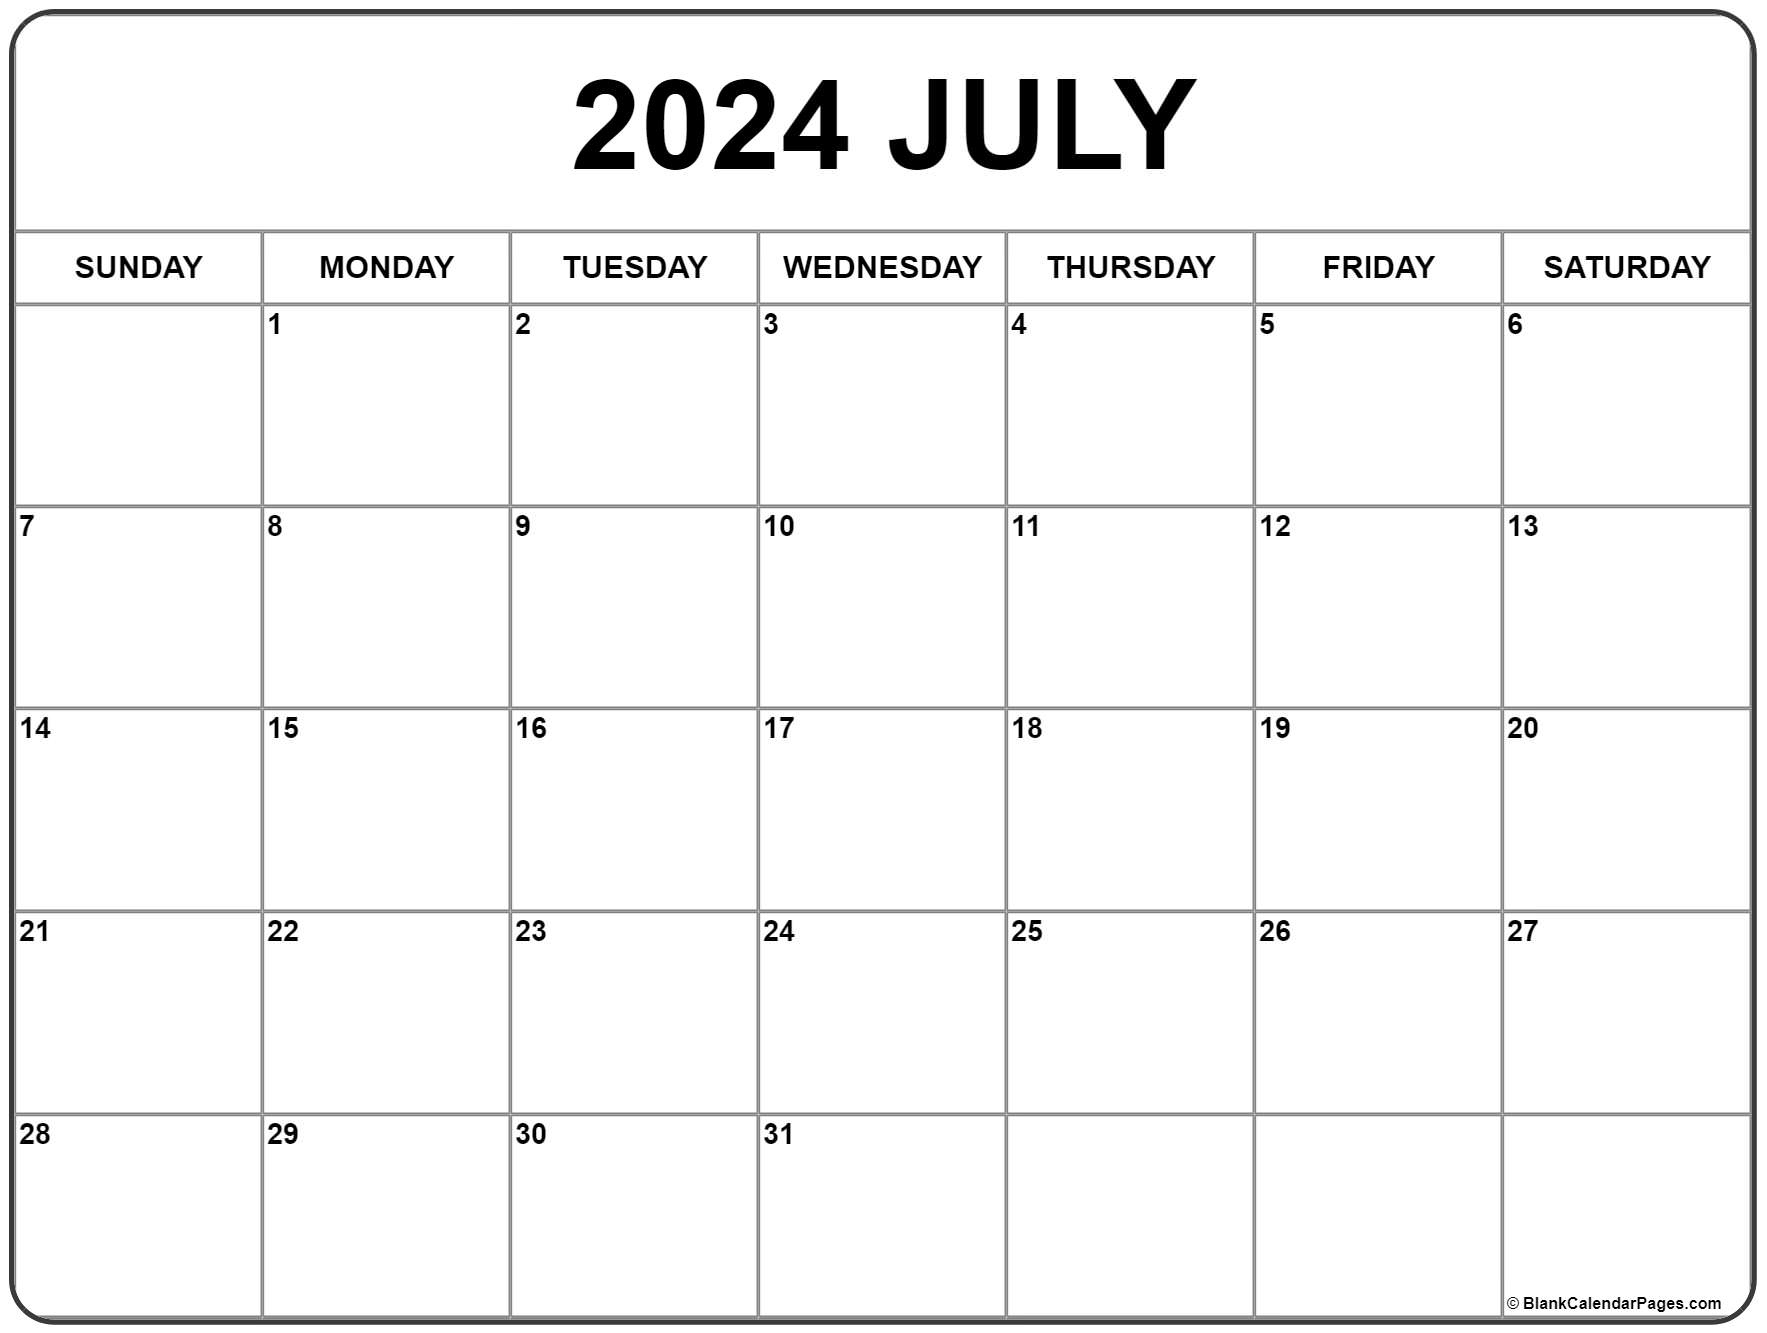 July 2024 Calendar | Free Printable Calendar | Calendar 2024 July Month